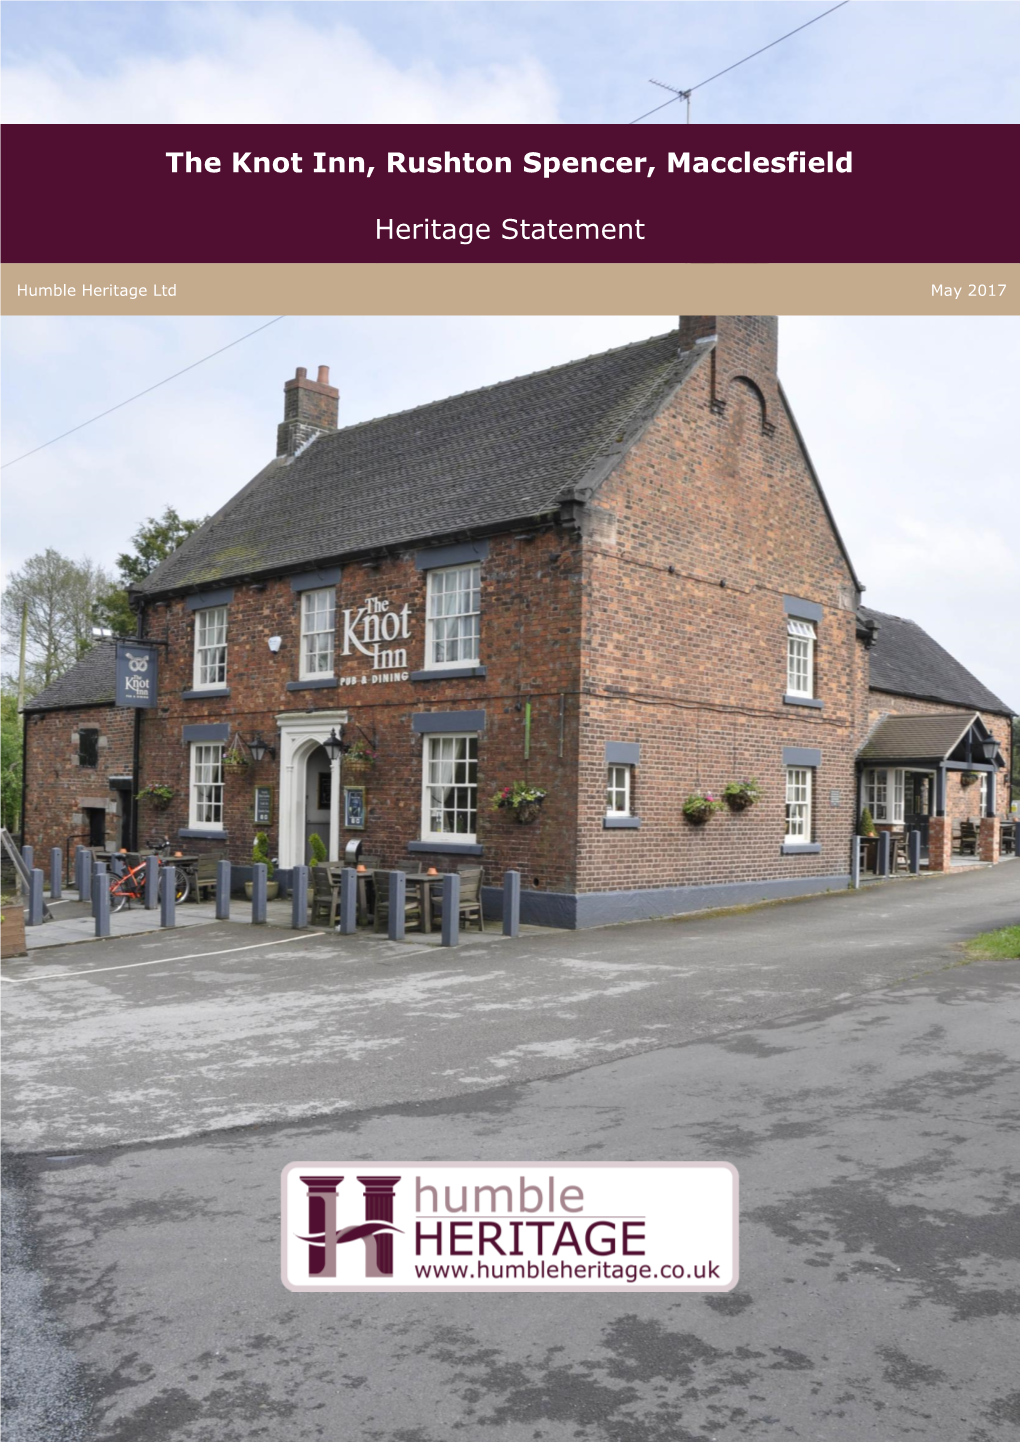 The Knot Inn, Rushton Spencer, Macclesfield Heritage Statement